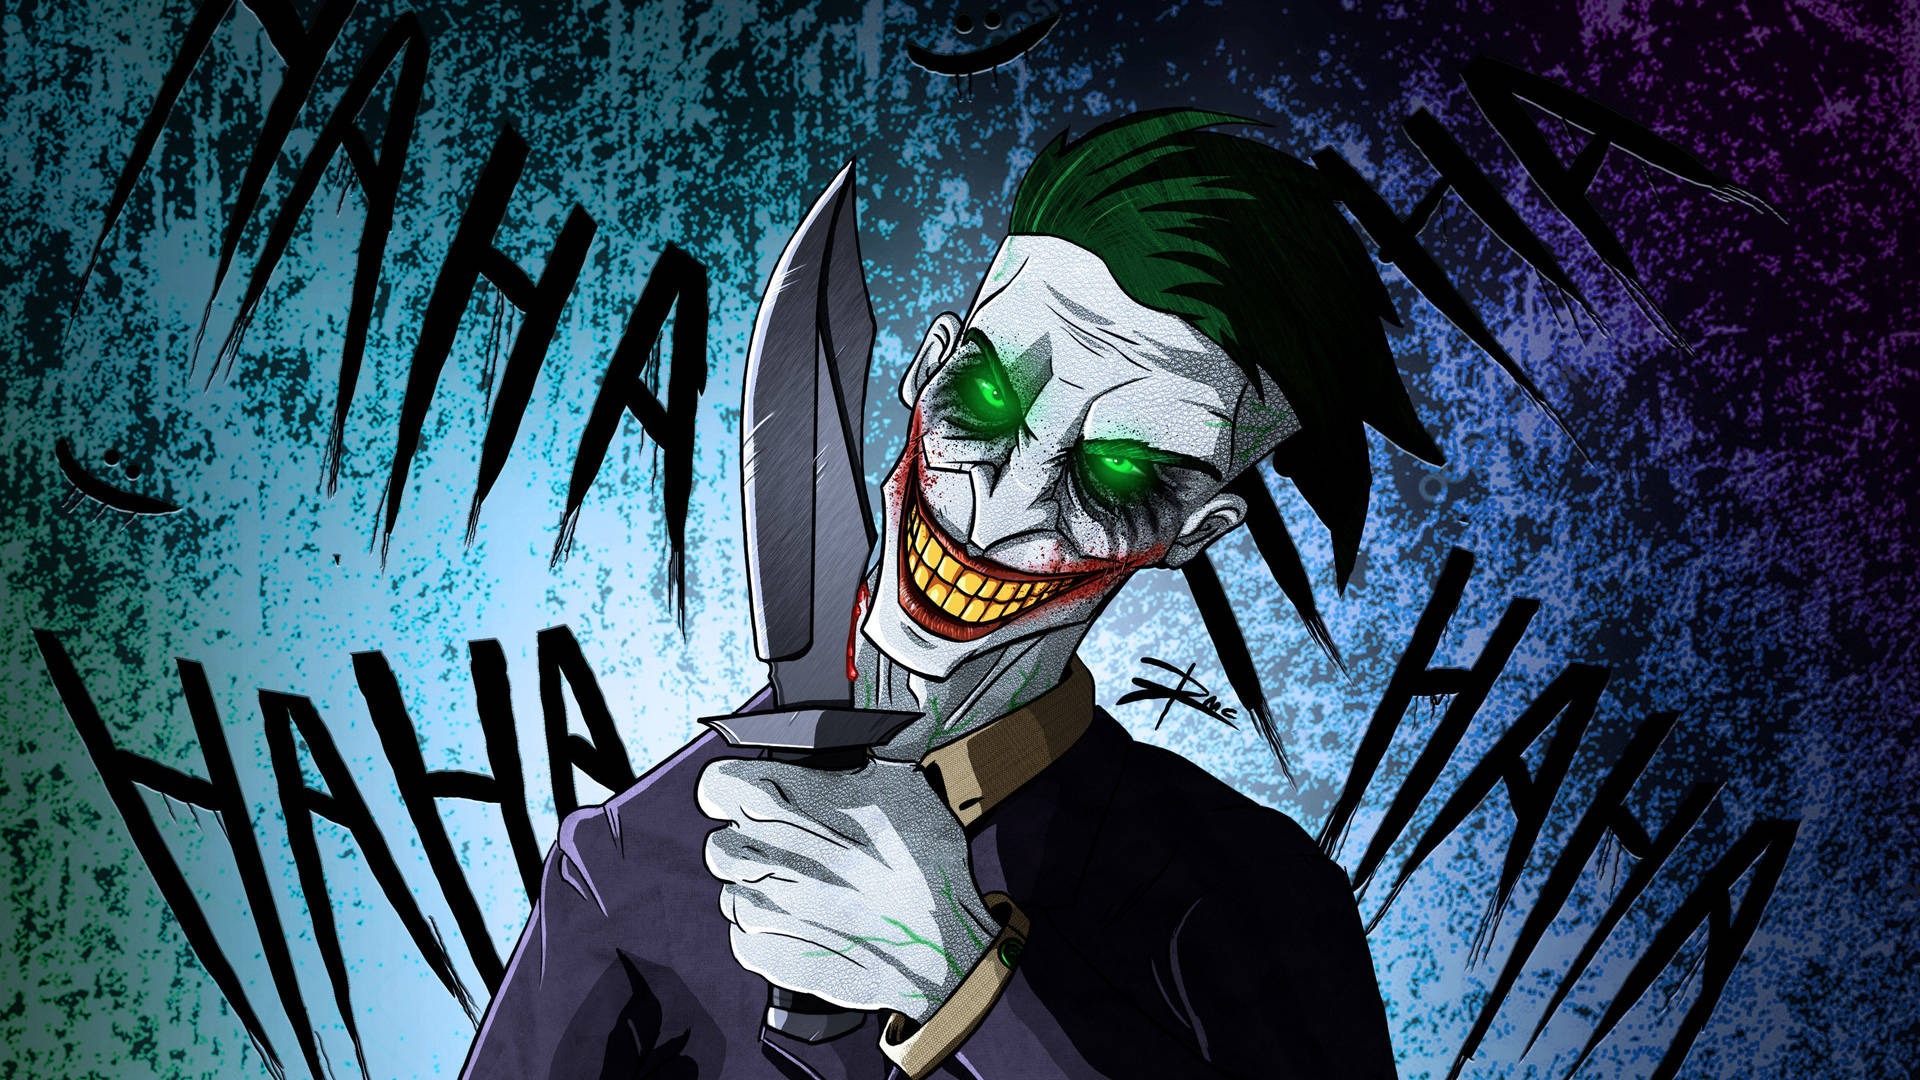 "Joker brings unforgettable gaming enjoyment with PUBG!" Wallpaper